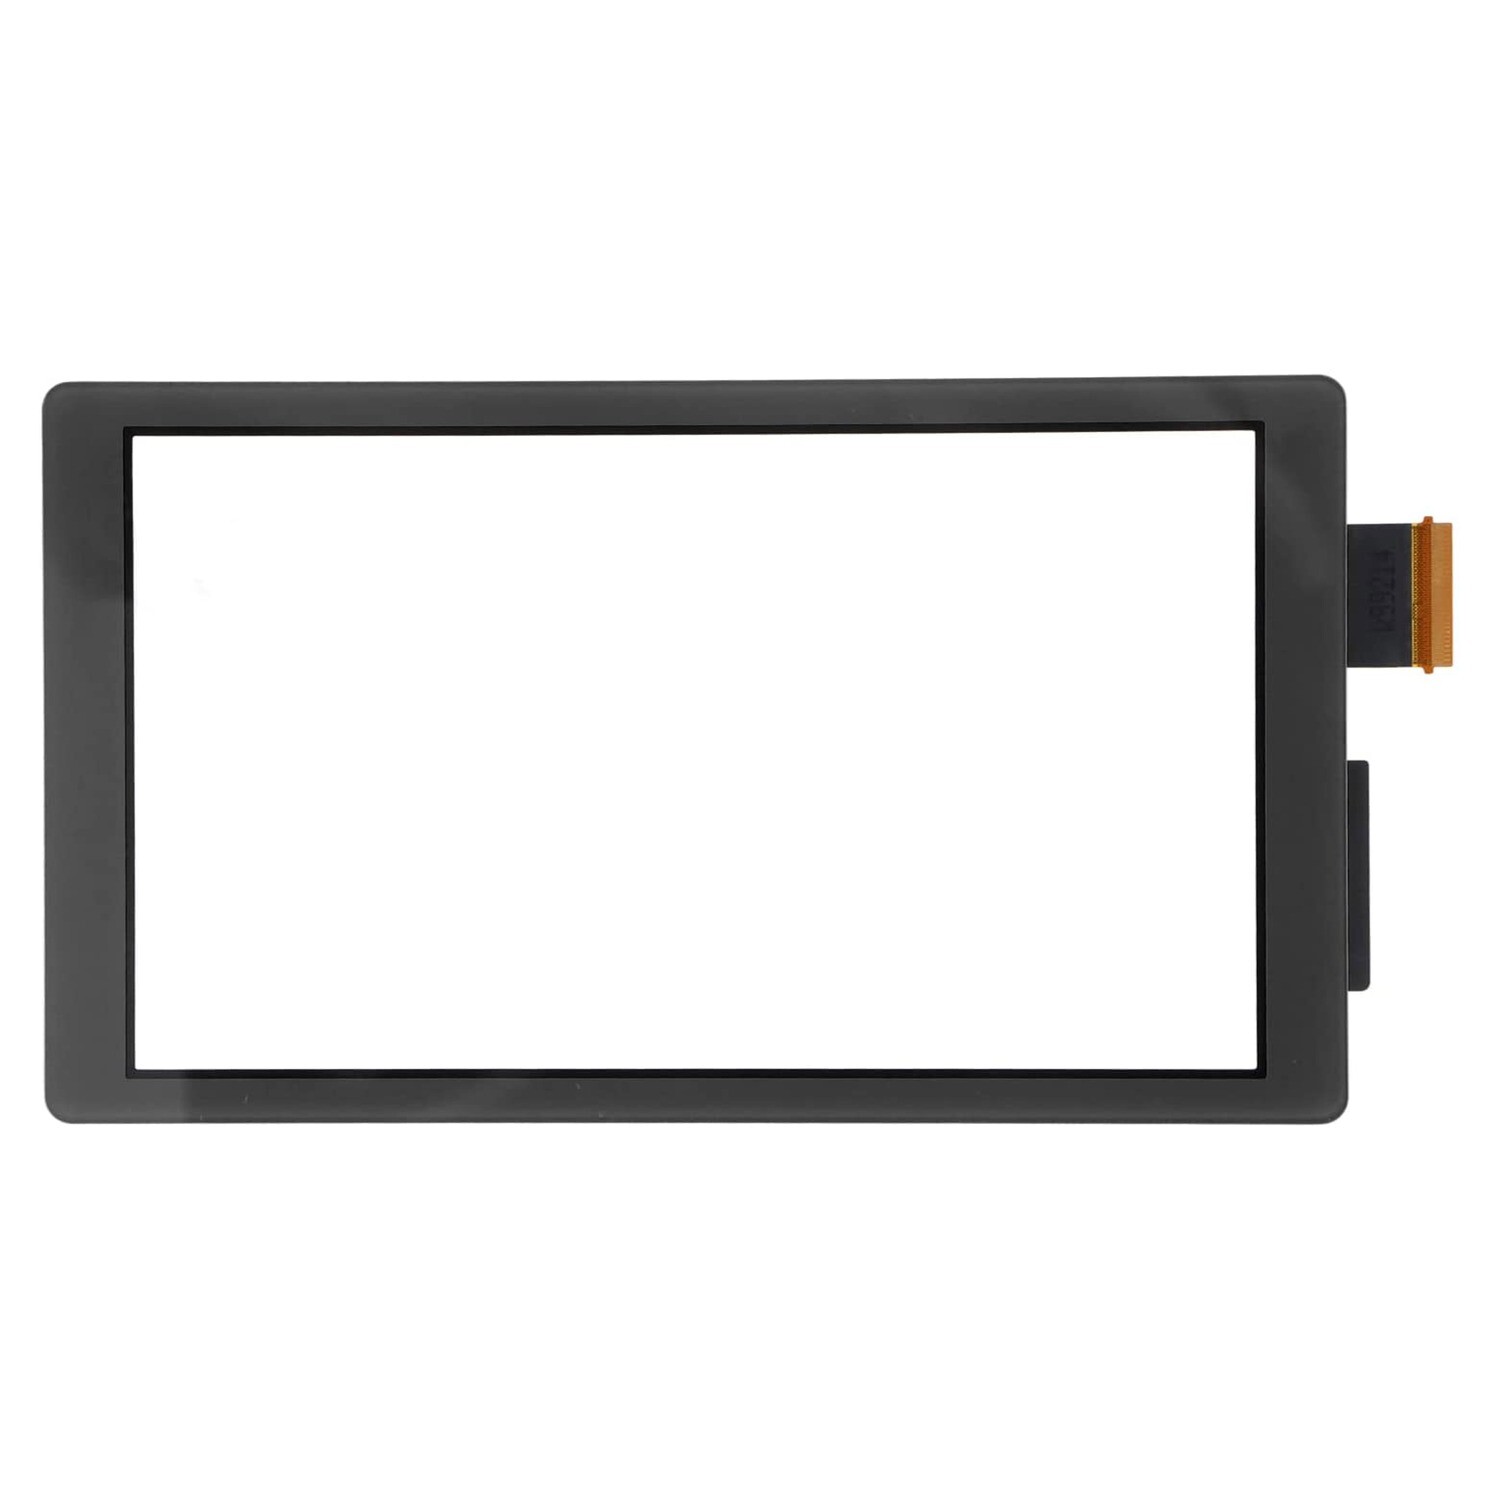 Switch Lite Touchscreen (Black)